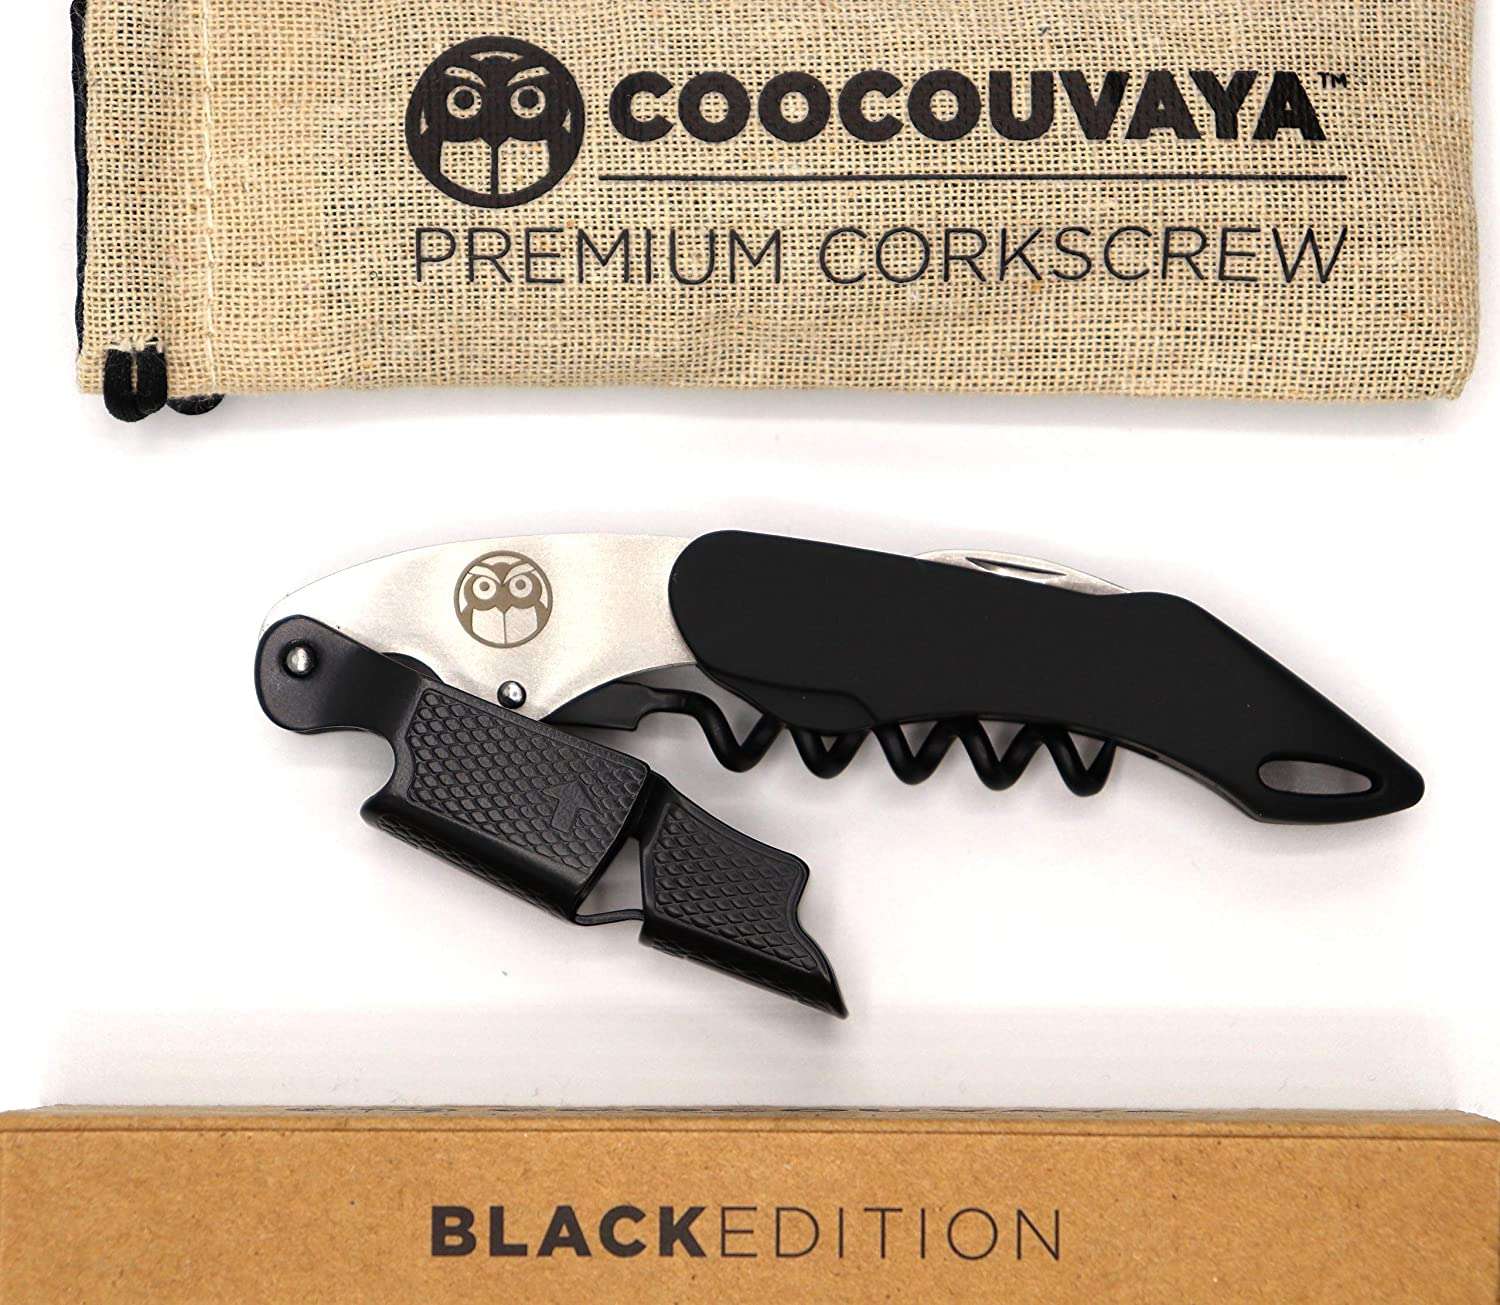 coocouvaya wise products premium professional corkscrew wine bottle opener